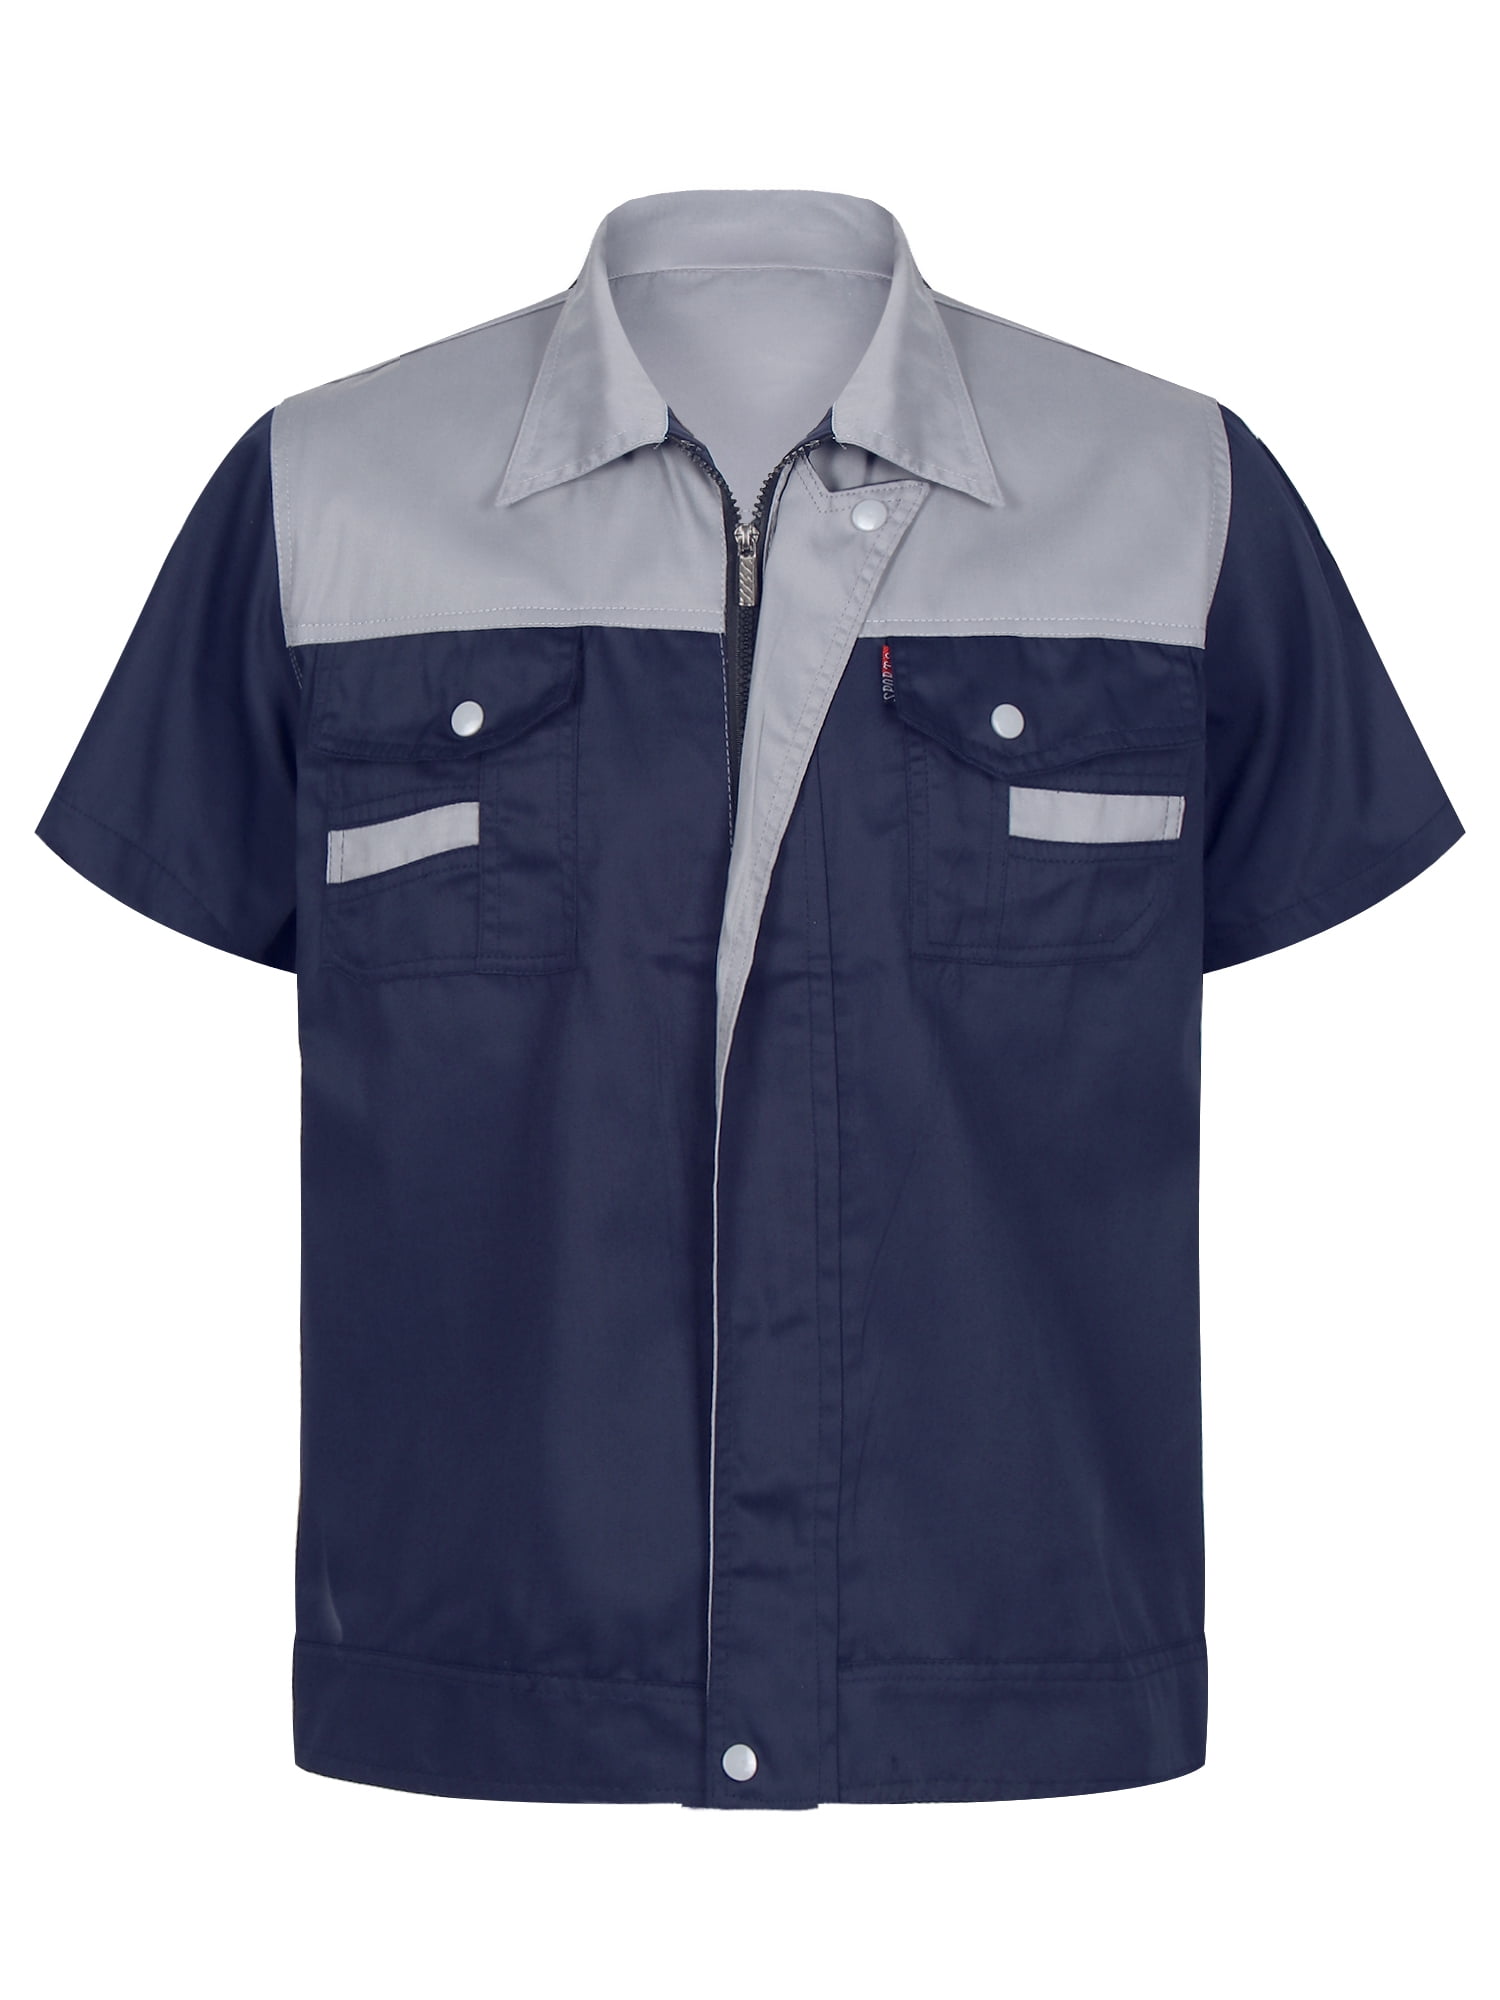 Yeahdor Mens Mechanic Workshop Uniform Color Contrast Short Sleeve Zipper  Jacket Factory Workers Uniform Tops Navy Blue&Grey M